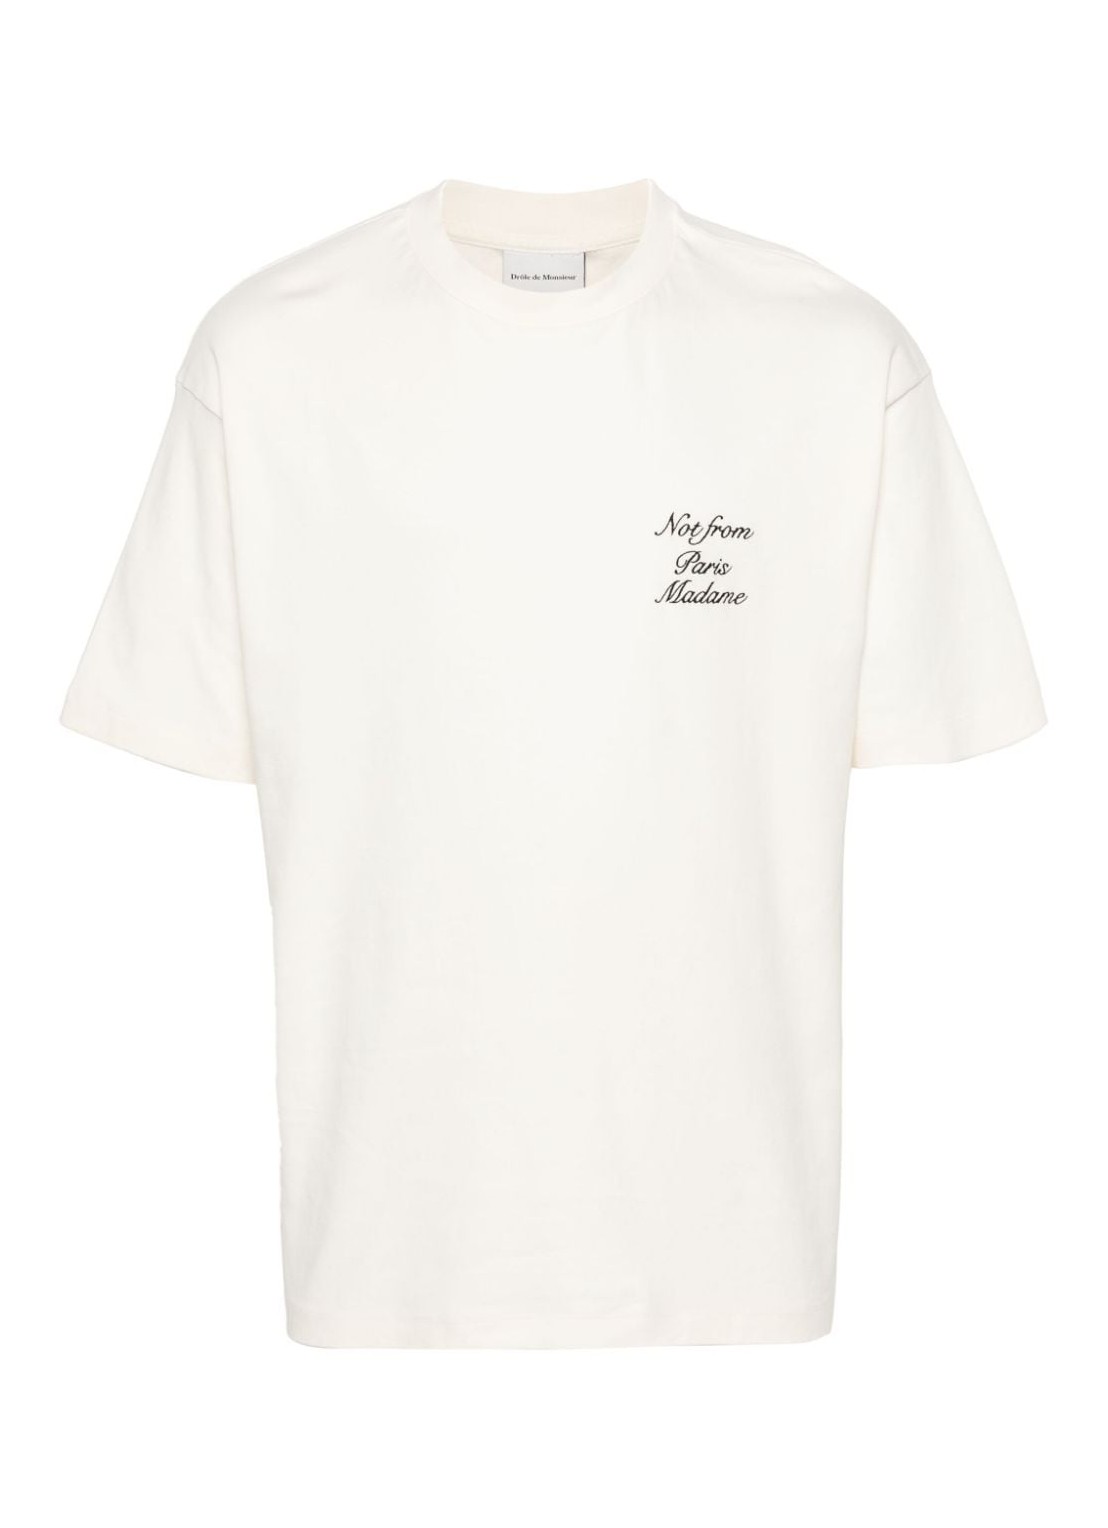 Camiseta drole de monsieur t-shirt man le t-shirt slogan cursive dts198co002cm cream talla M
 